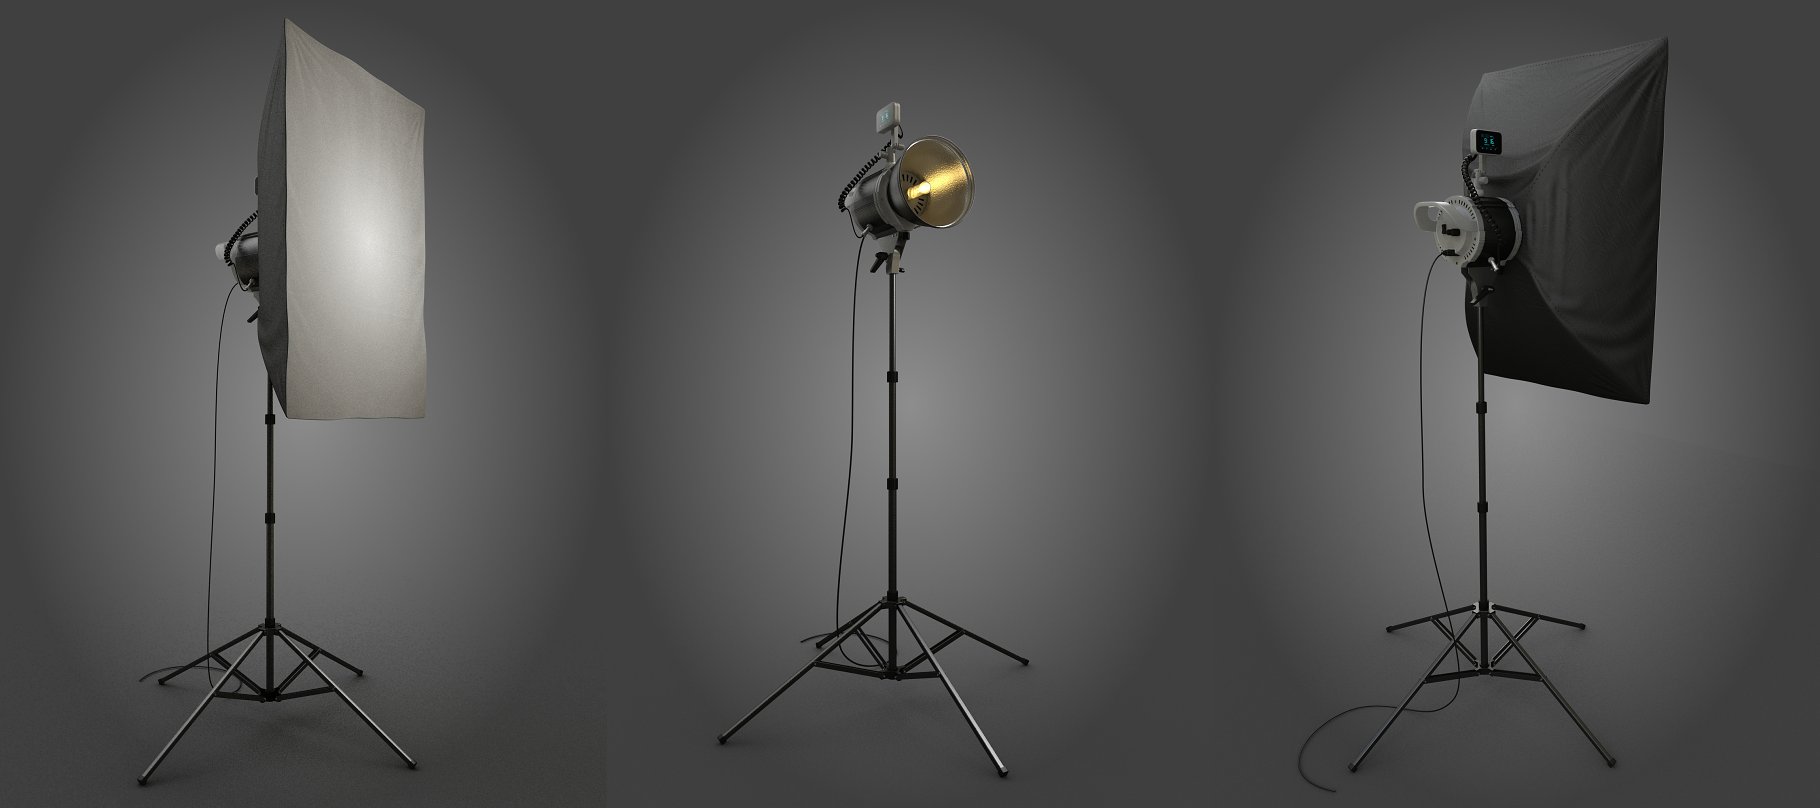 Rendering of a wonderful 3d model of a professional studio light